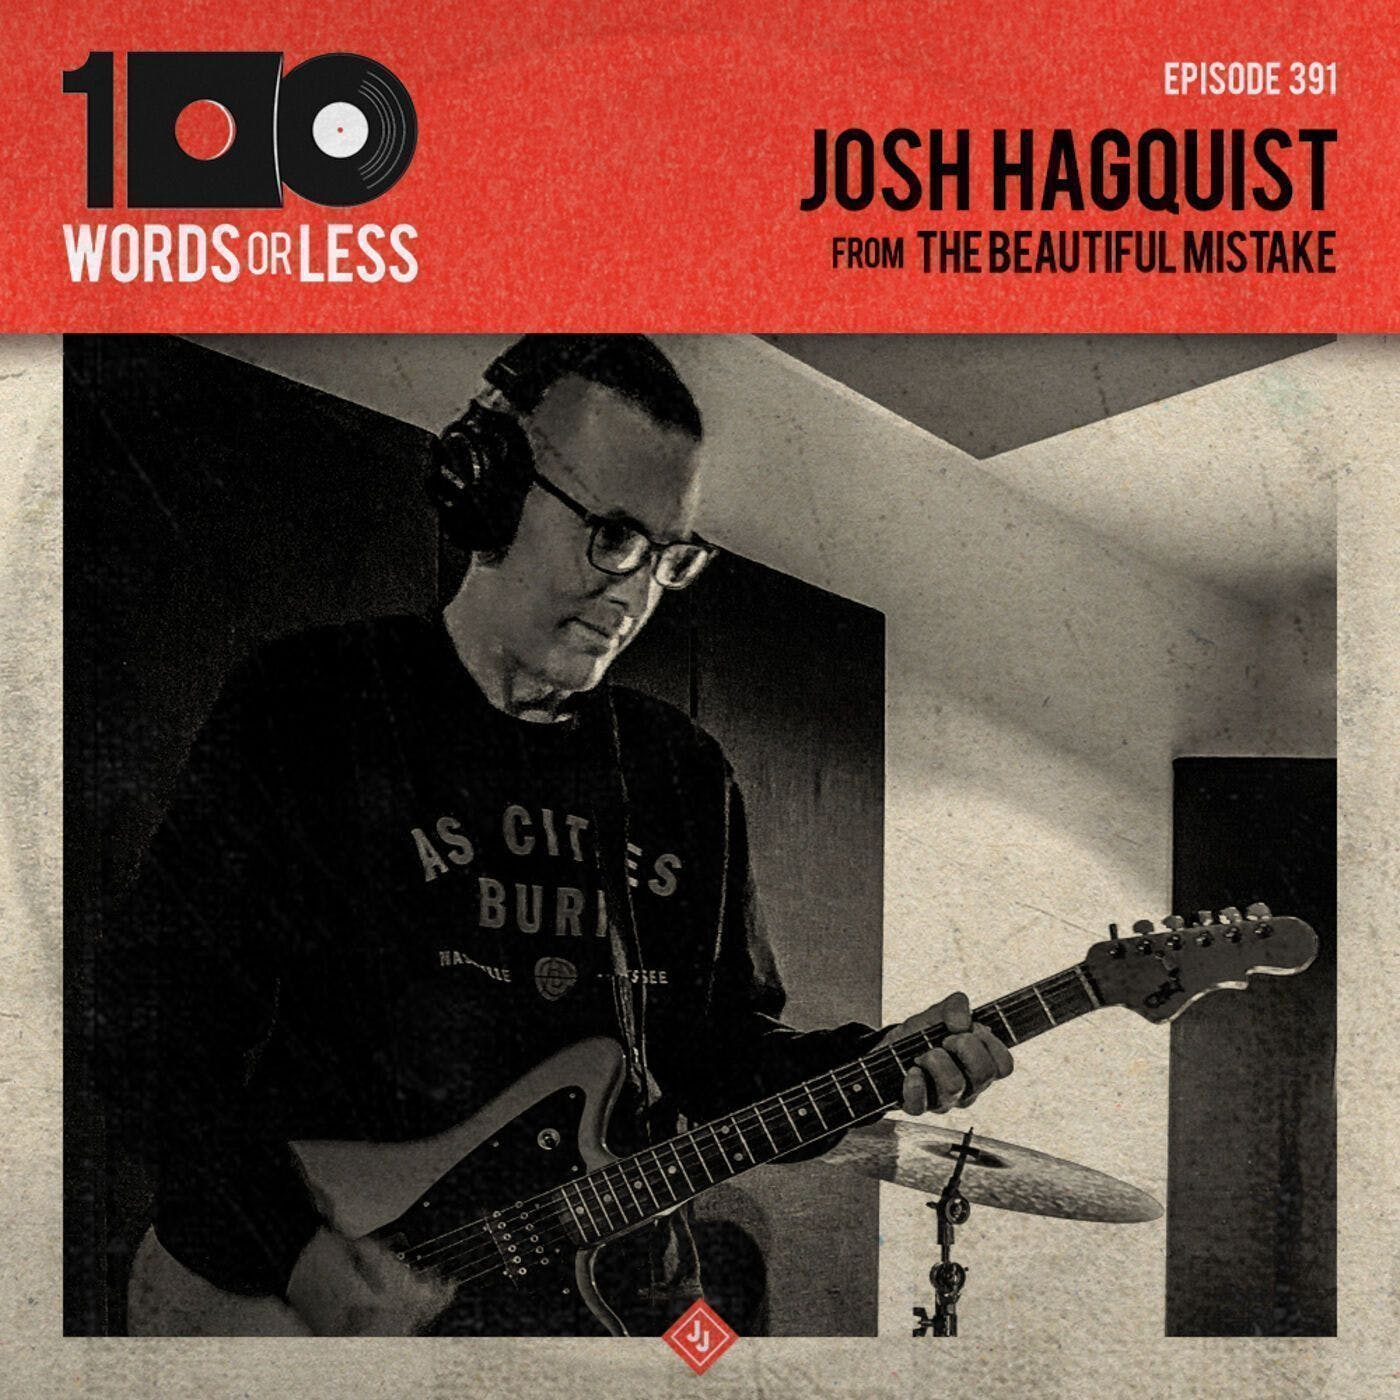 Josh Hagquist from The Beautiful Mistake